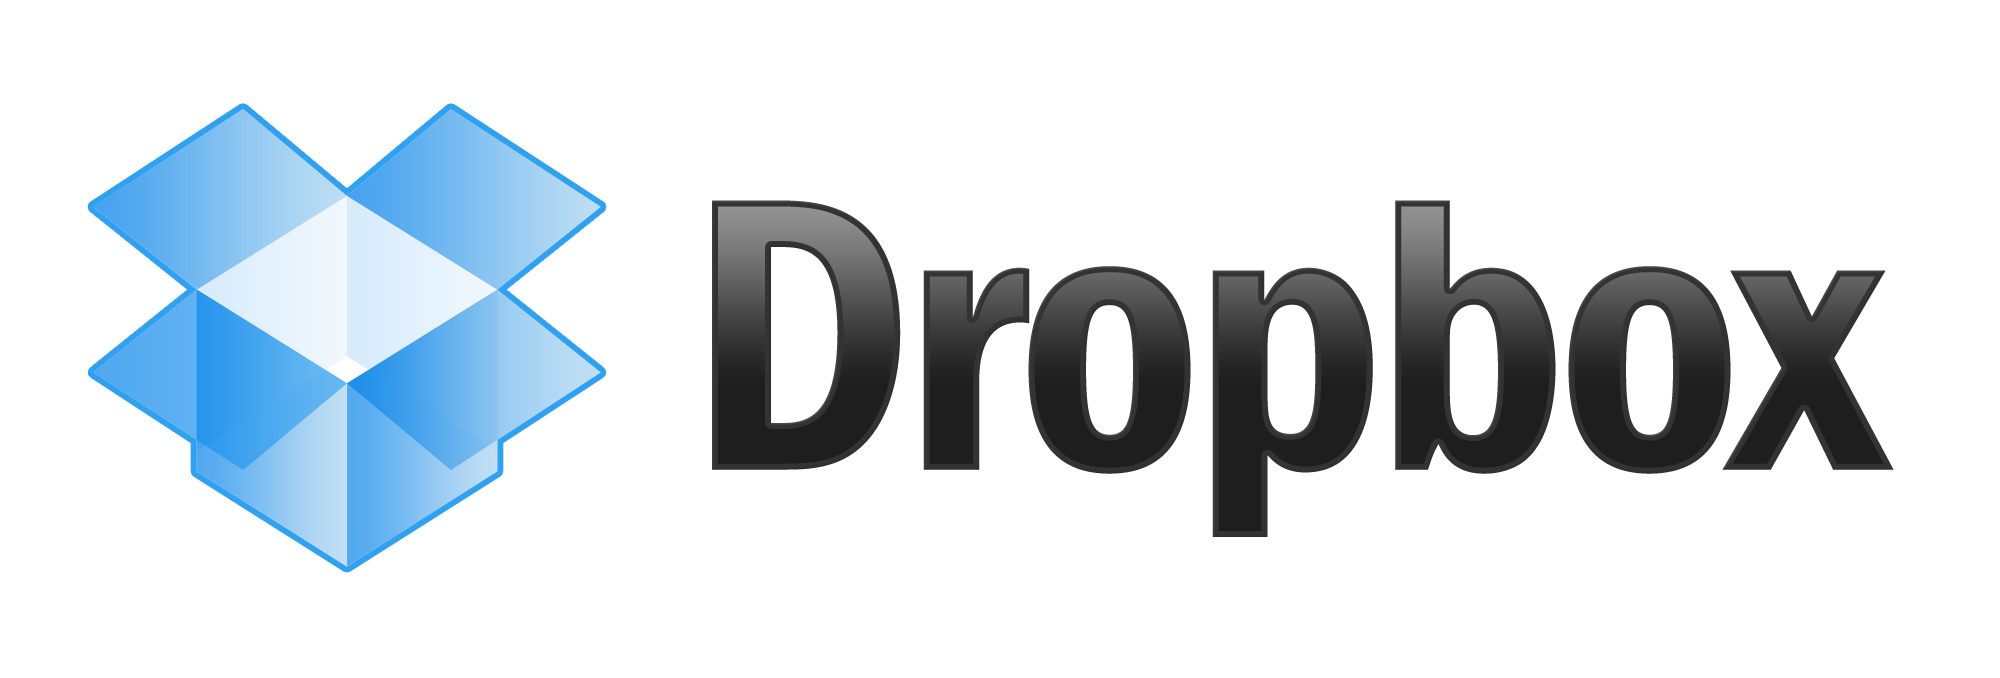 How to use DropBox with Raspberry Pi » RasPi.TV